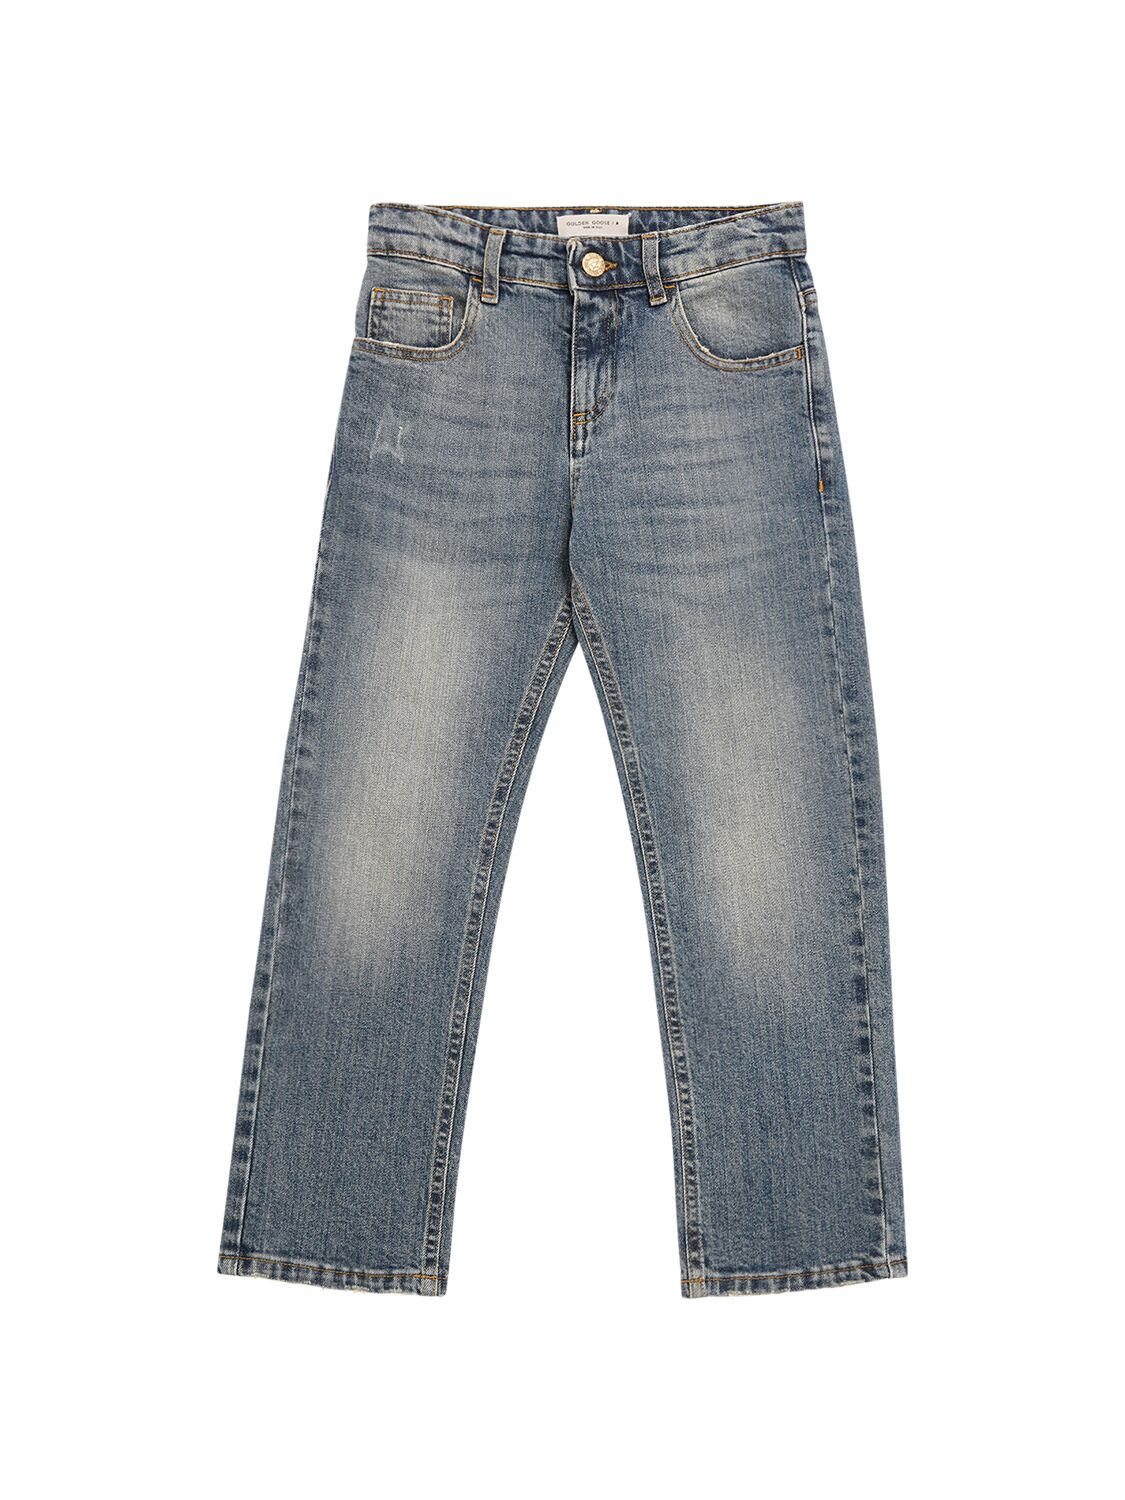 Image of Medium Stonewashed Cotton Denim Jeans